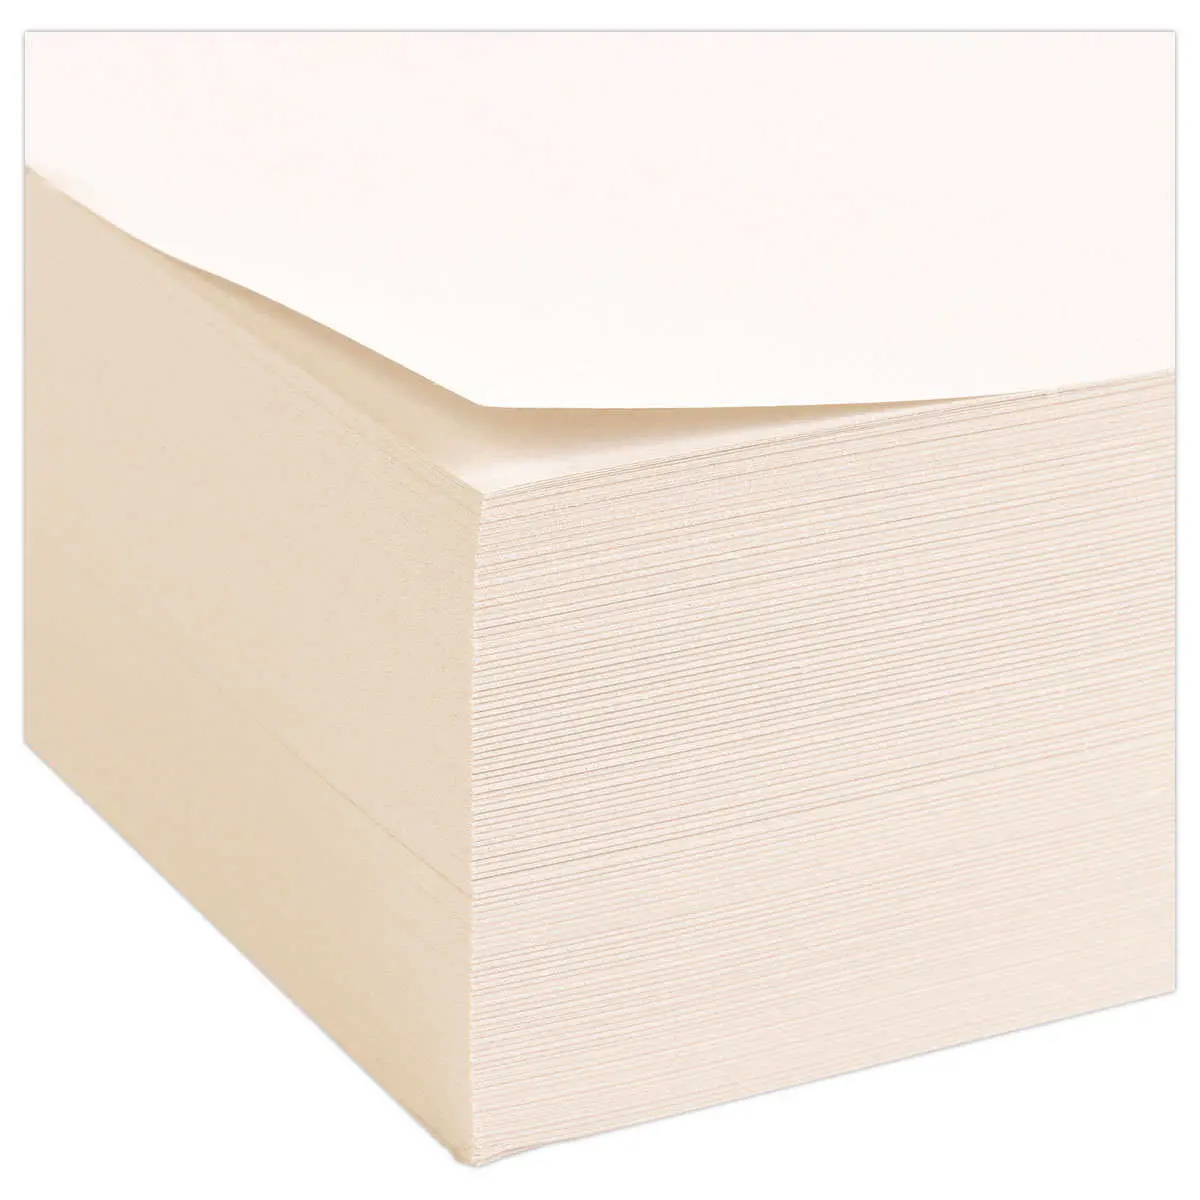 PLEIN CIEL Ramette 500 feuilles papier Extra Blanc A+ Plein Ciel A4 80g CIE  171 2100000